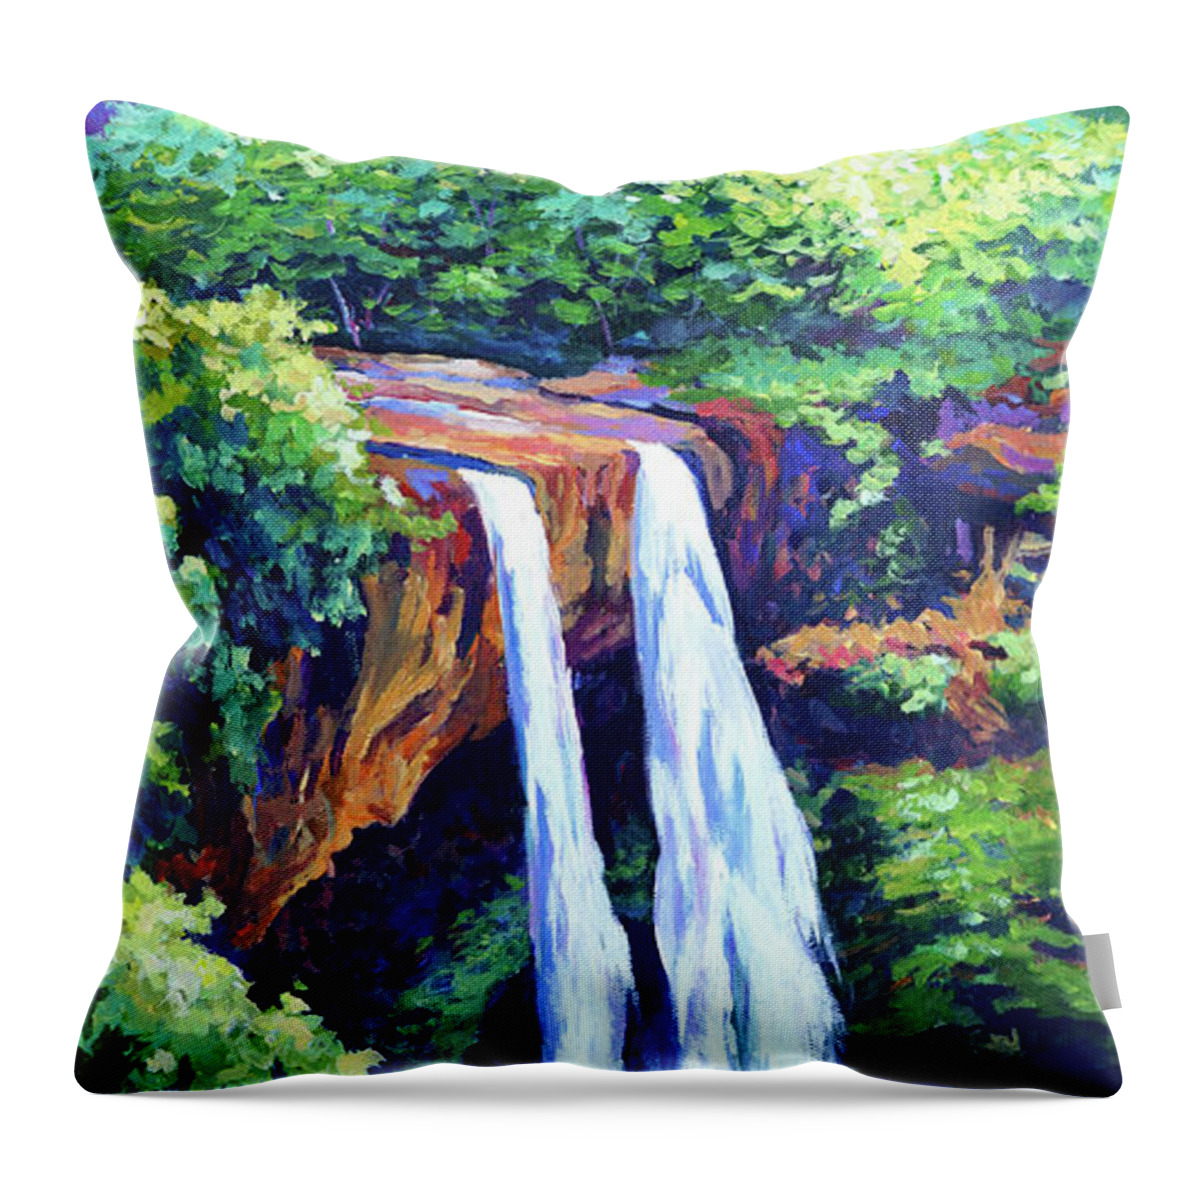 Waterfall Throw Pillow featuring the painting Wailua Falls by John Clark